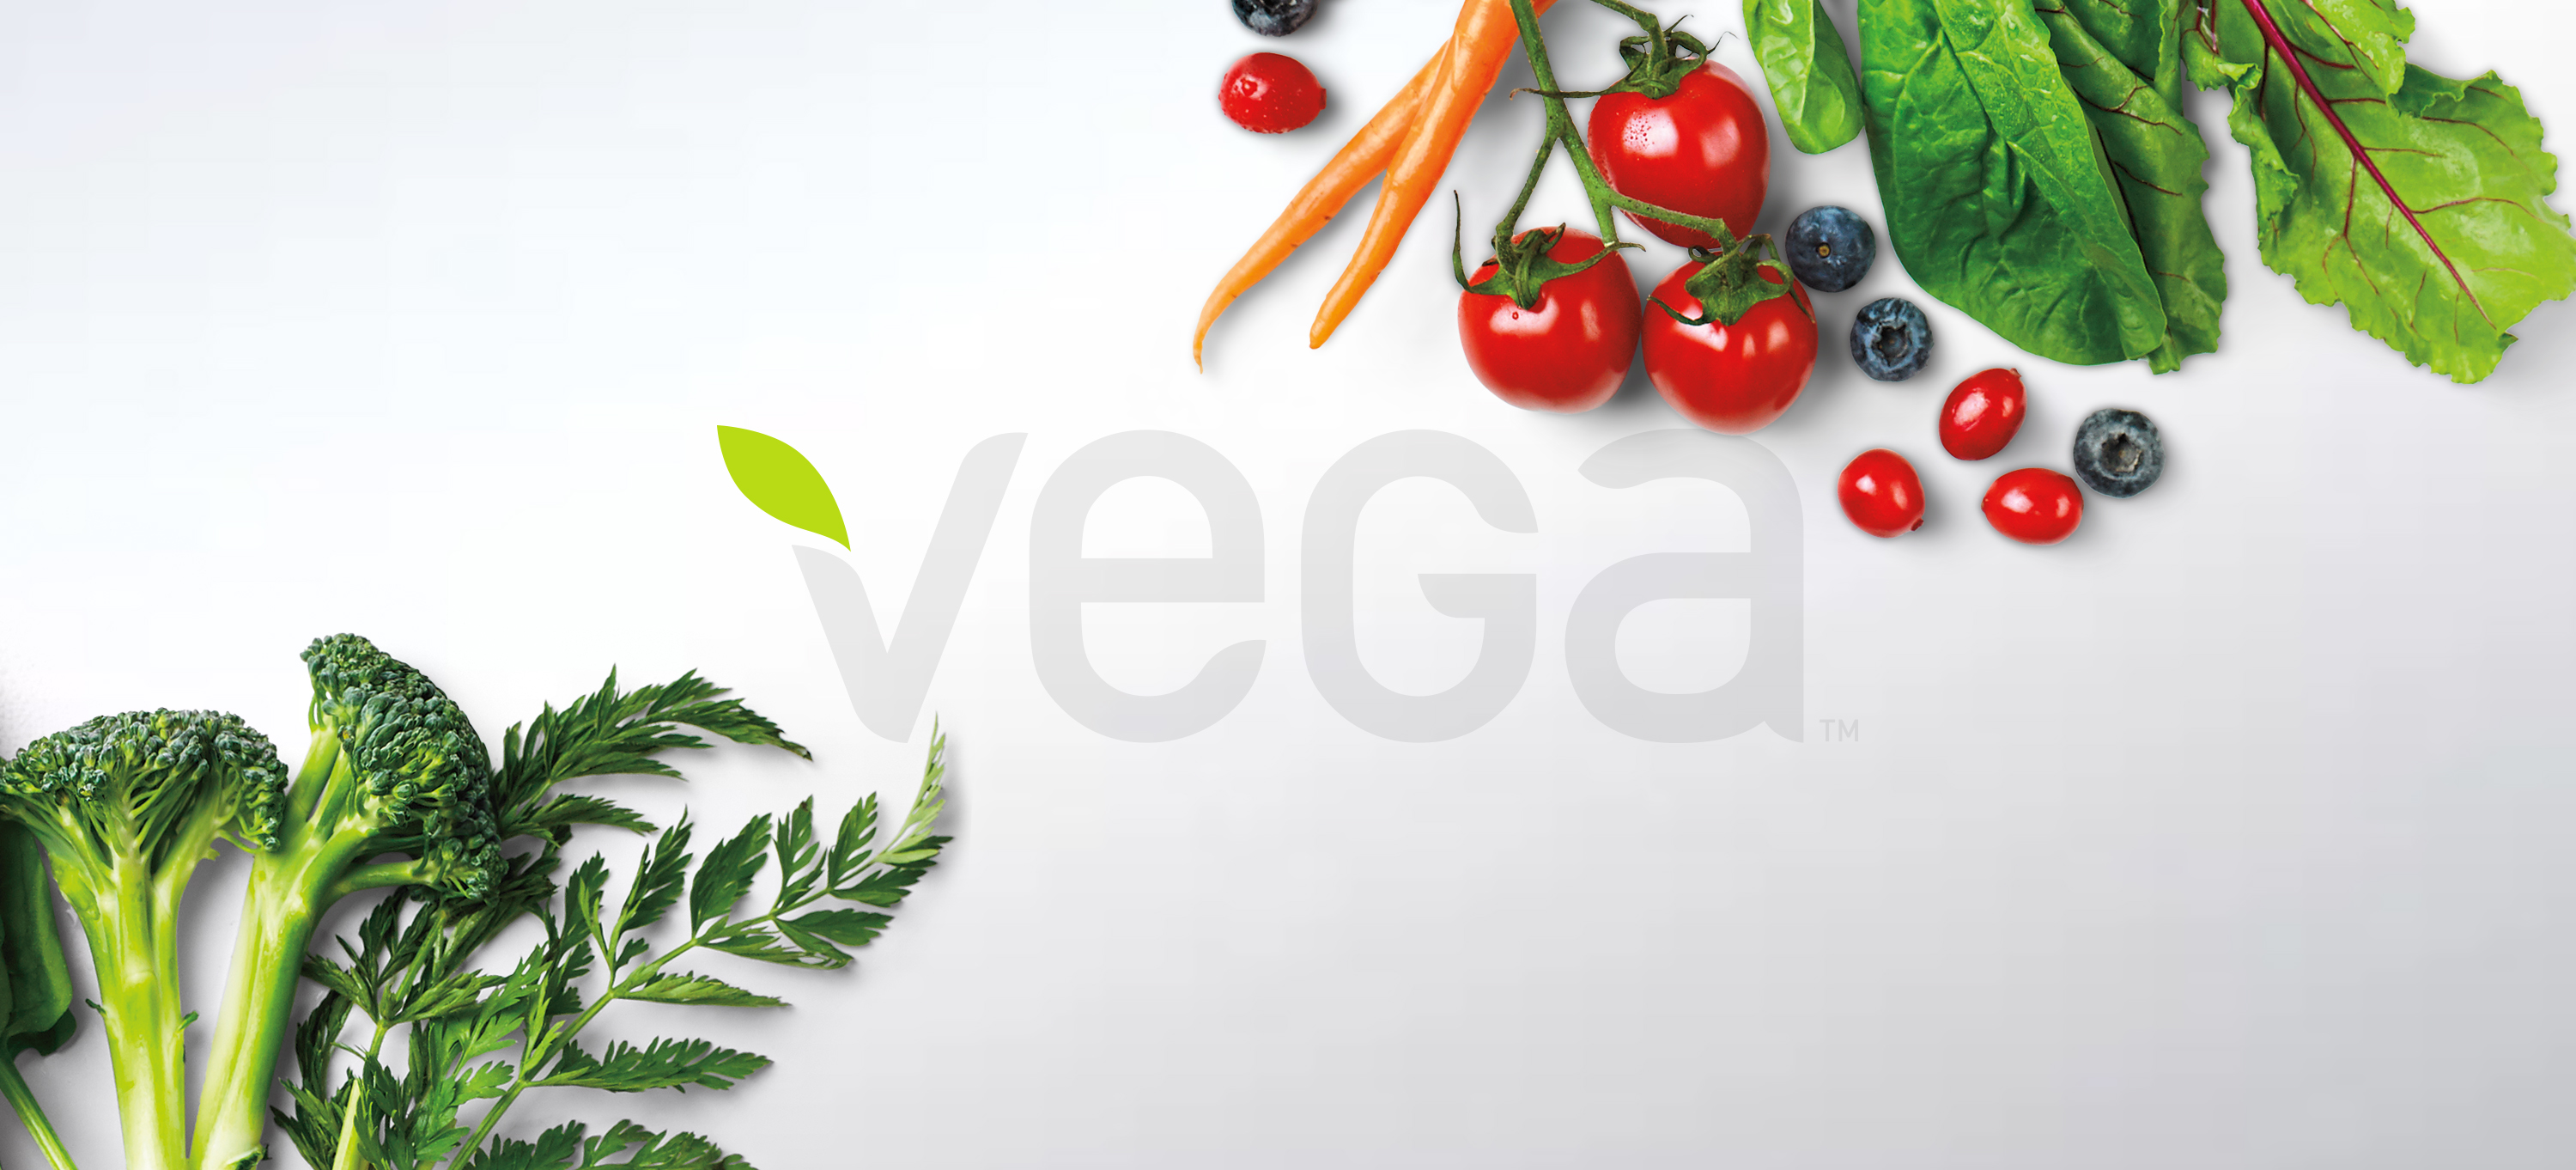 Vega Logo | Dossier Creative | Plant-based success story